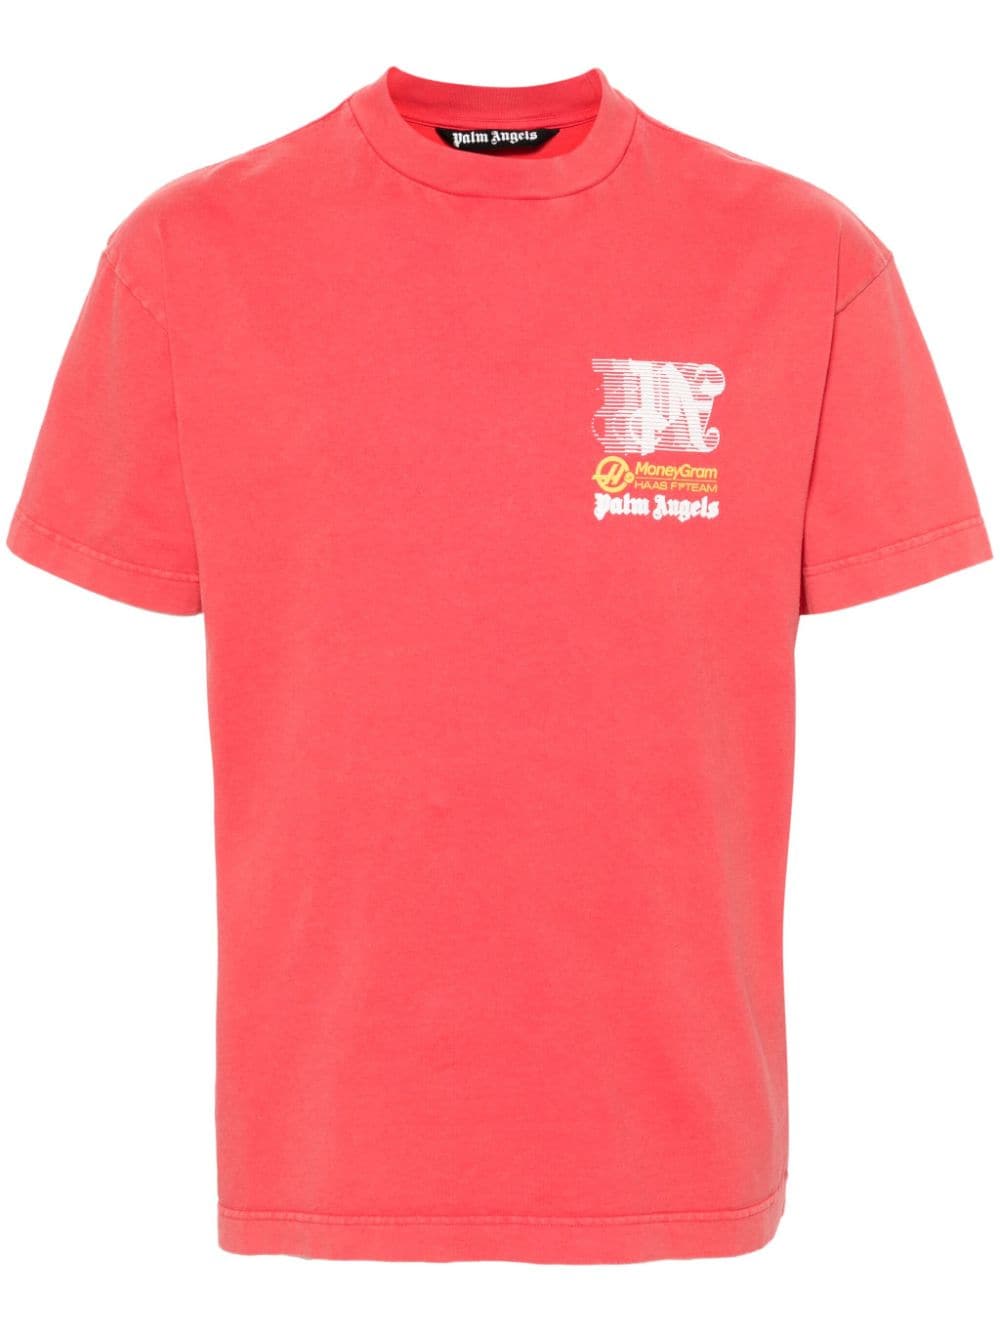 Palm Angels X Moneygram Haas F1 Cotton T-shirt In Red